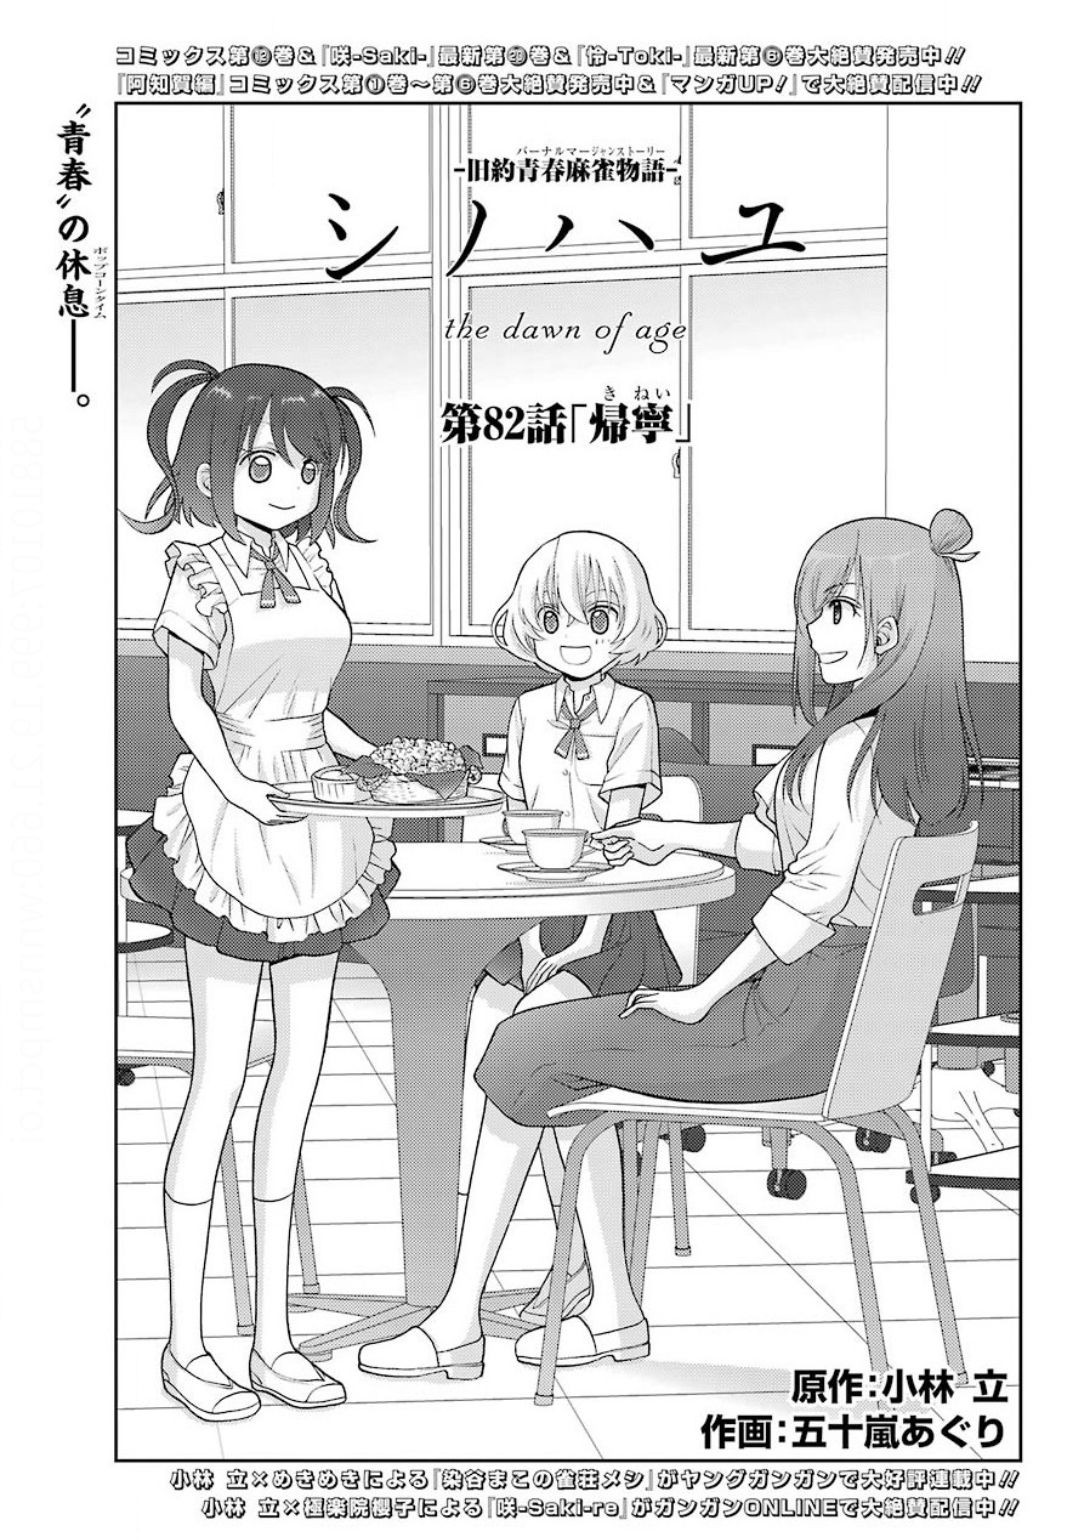 Shinohayu - The Dawn of Age Manga - Chapter 082 - Page 1